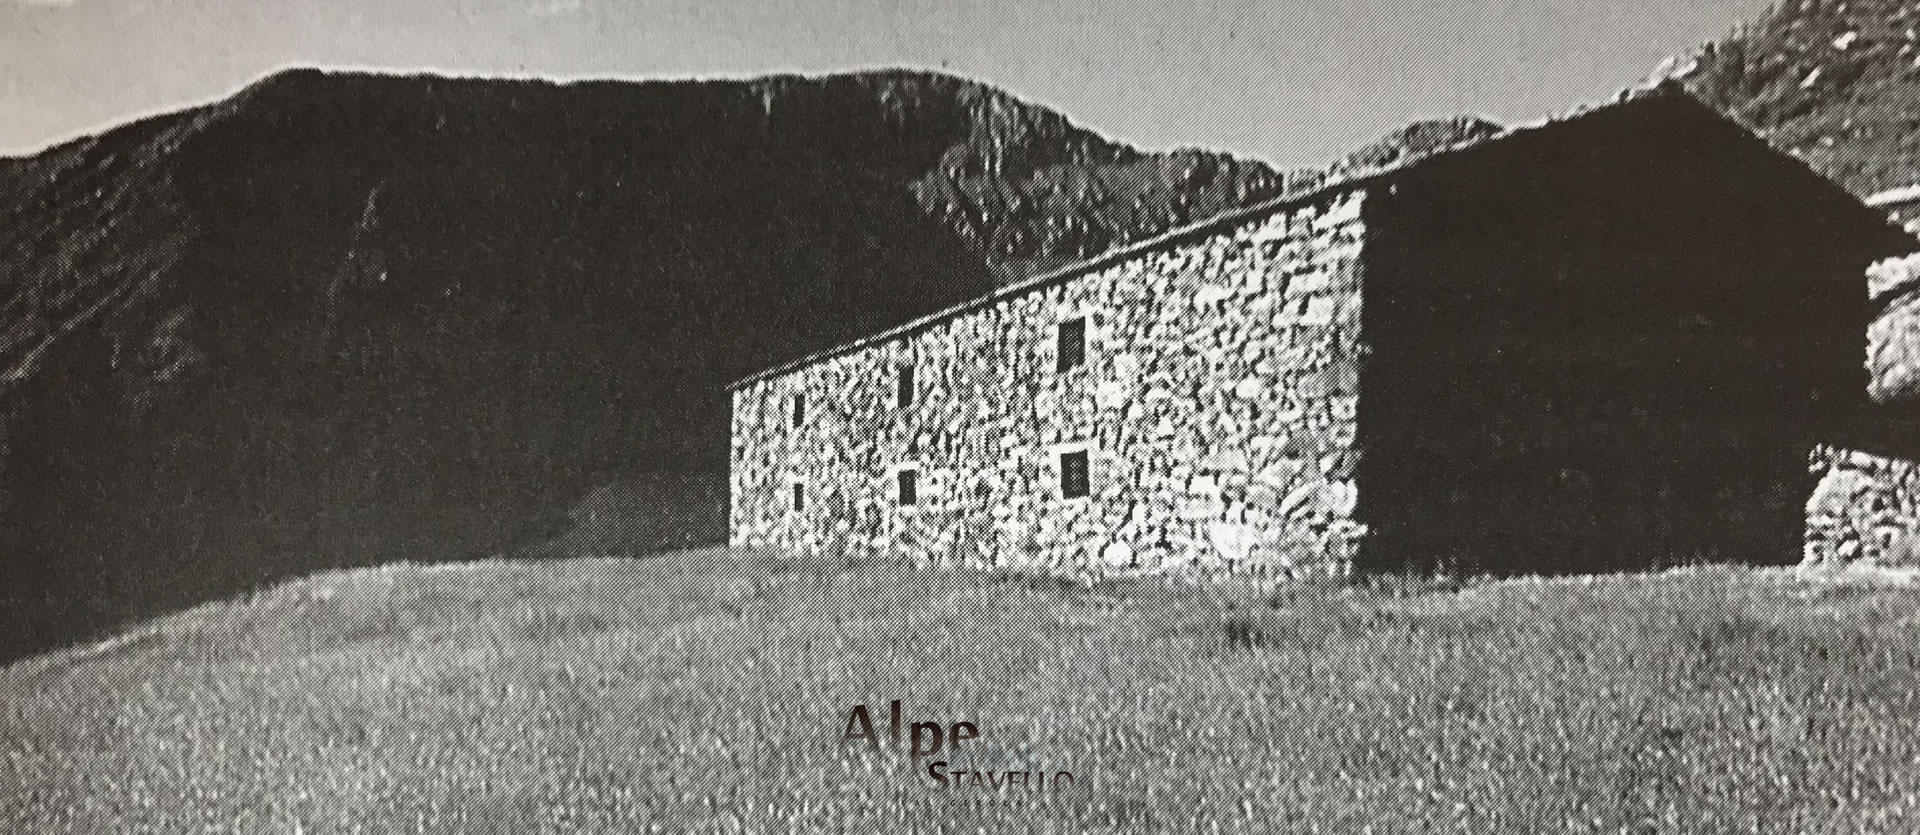 Alpe Stavello - Valgerola - la storia